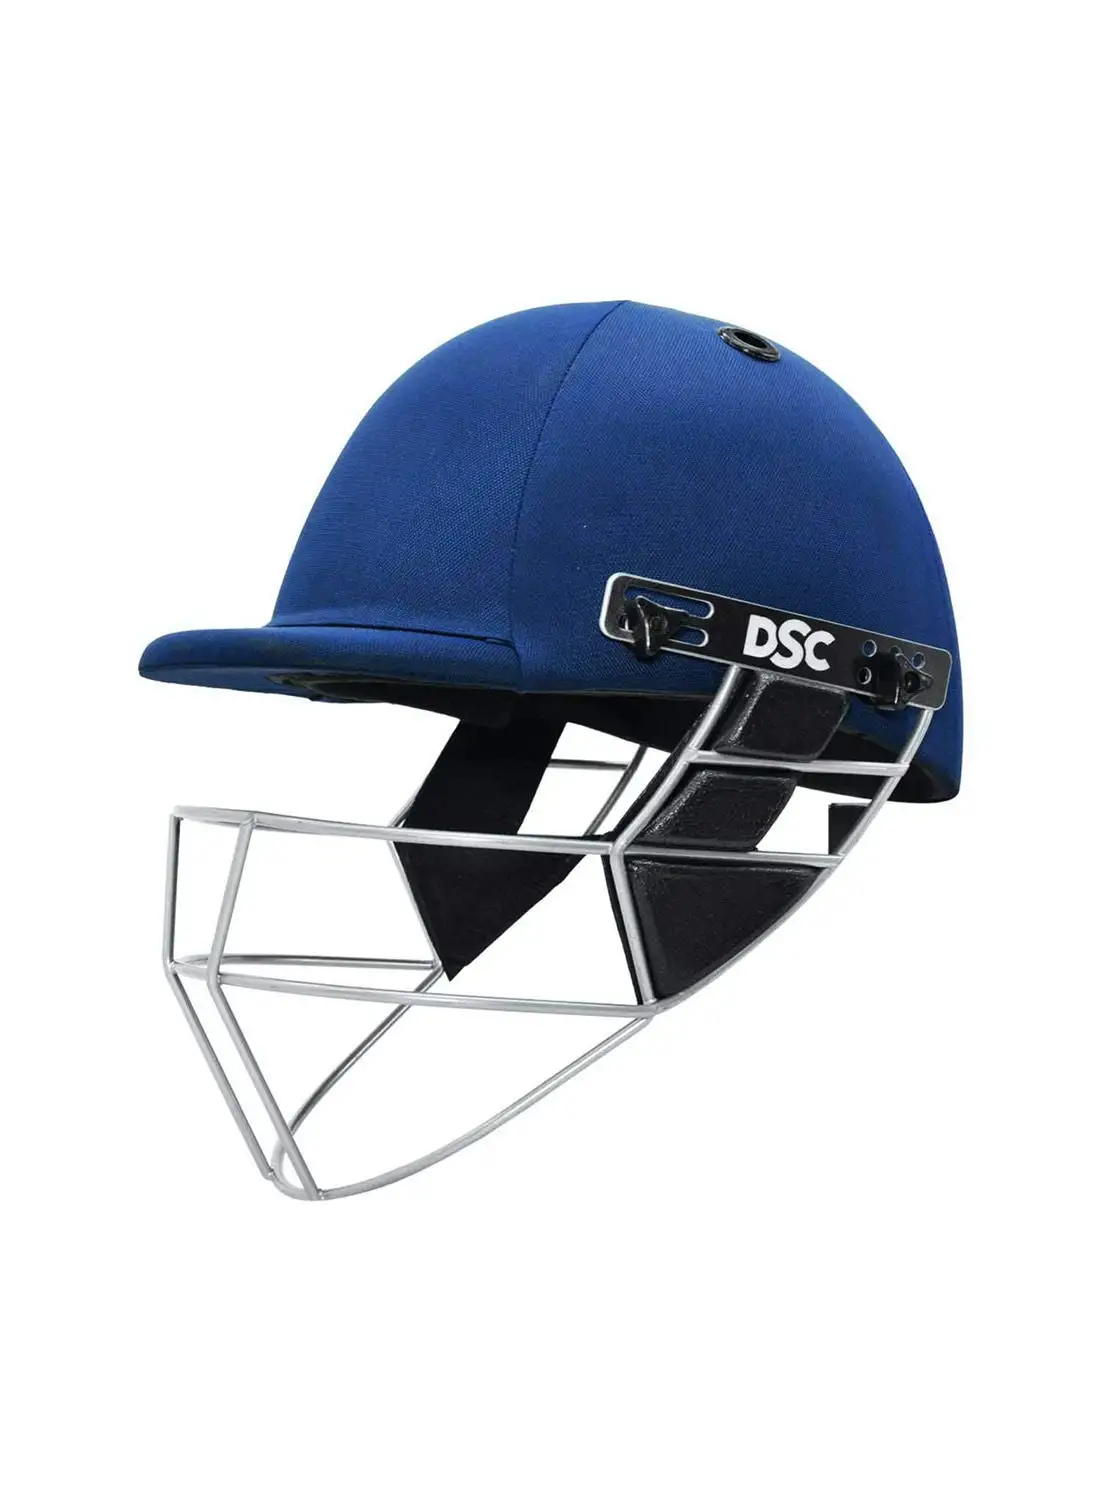 DSC Defender Cricket Helmet For Men Boys Adjustable Steel Grill Back Support Strap Light Weight